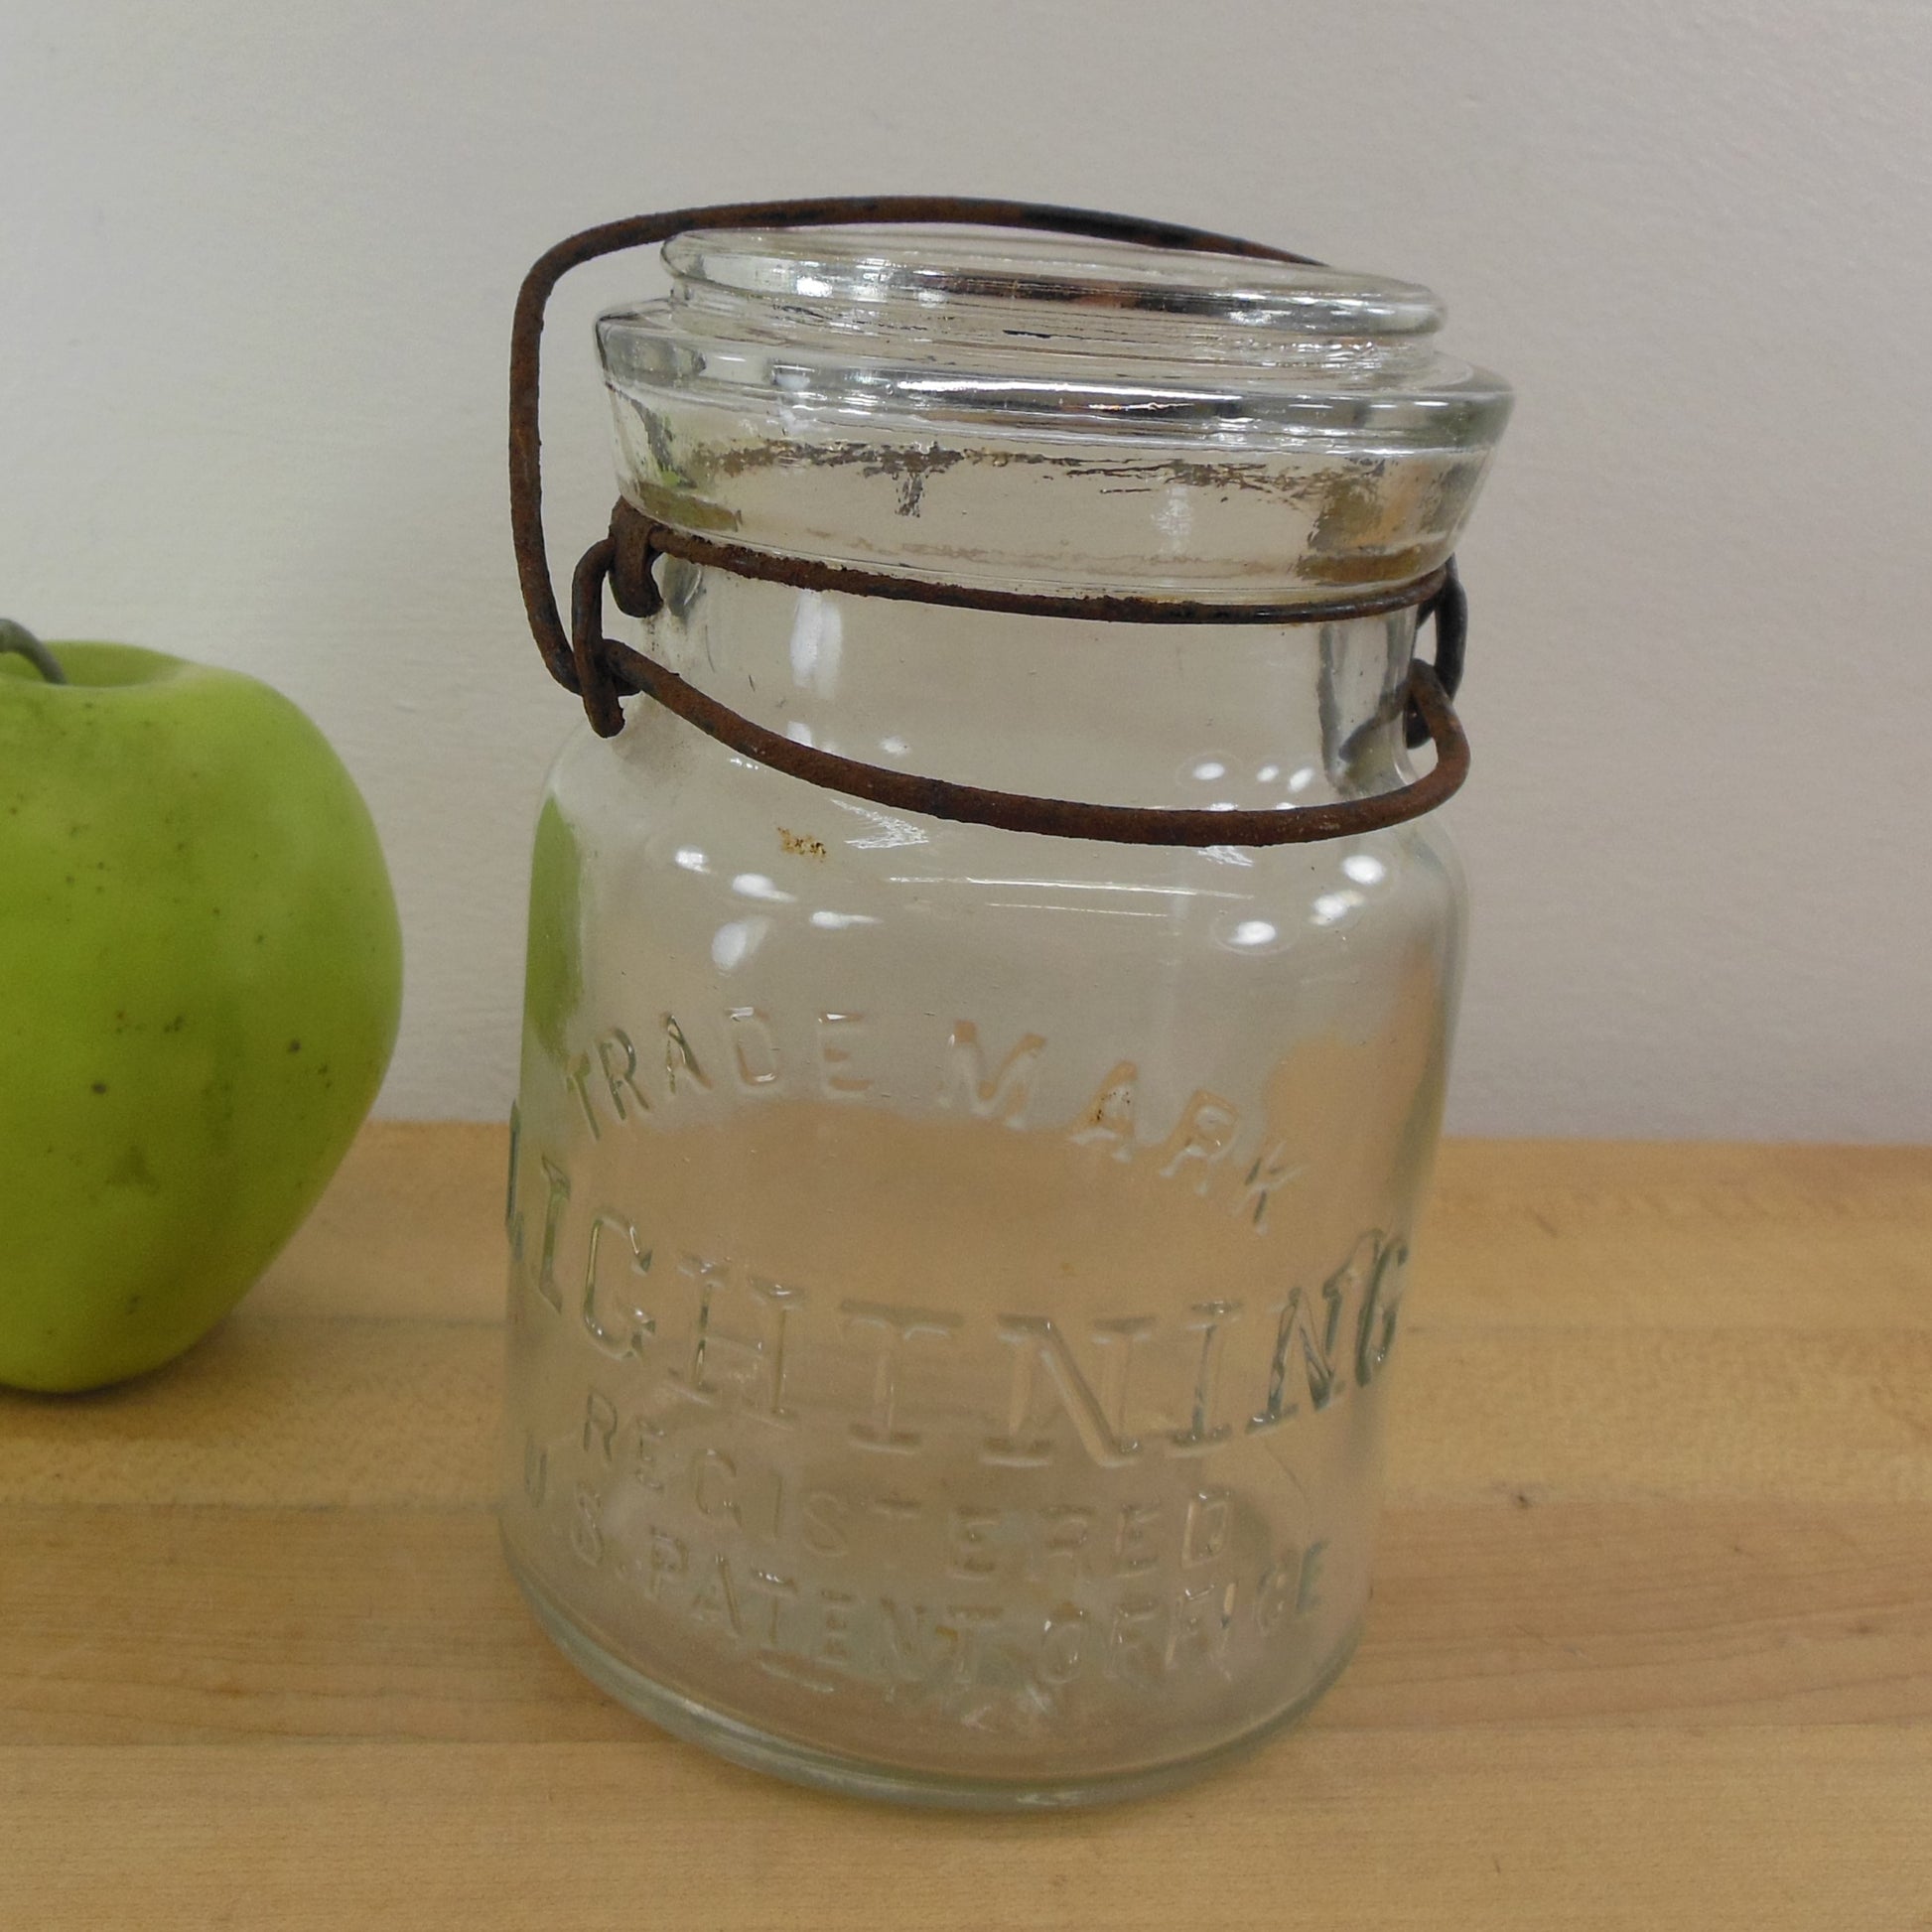 Lightning Putnam Trademark Patent Pint Clear Glass Fruit Canning Jar